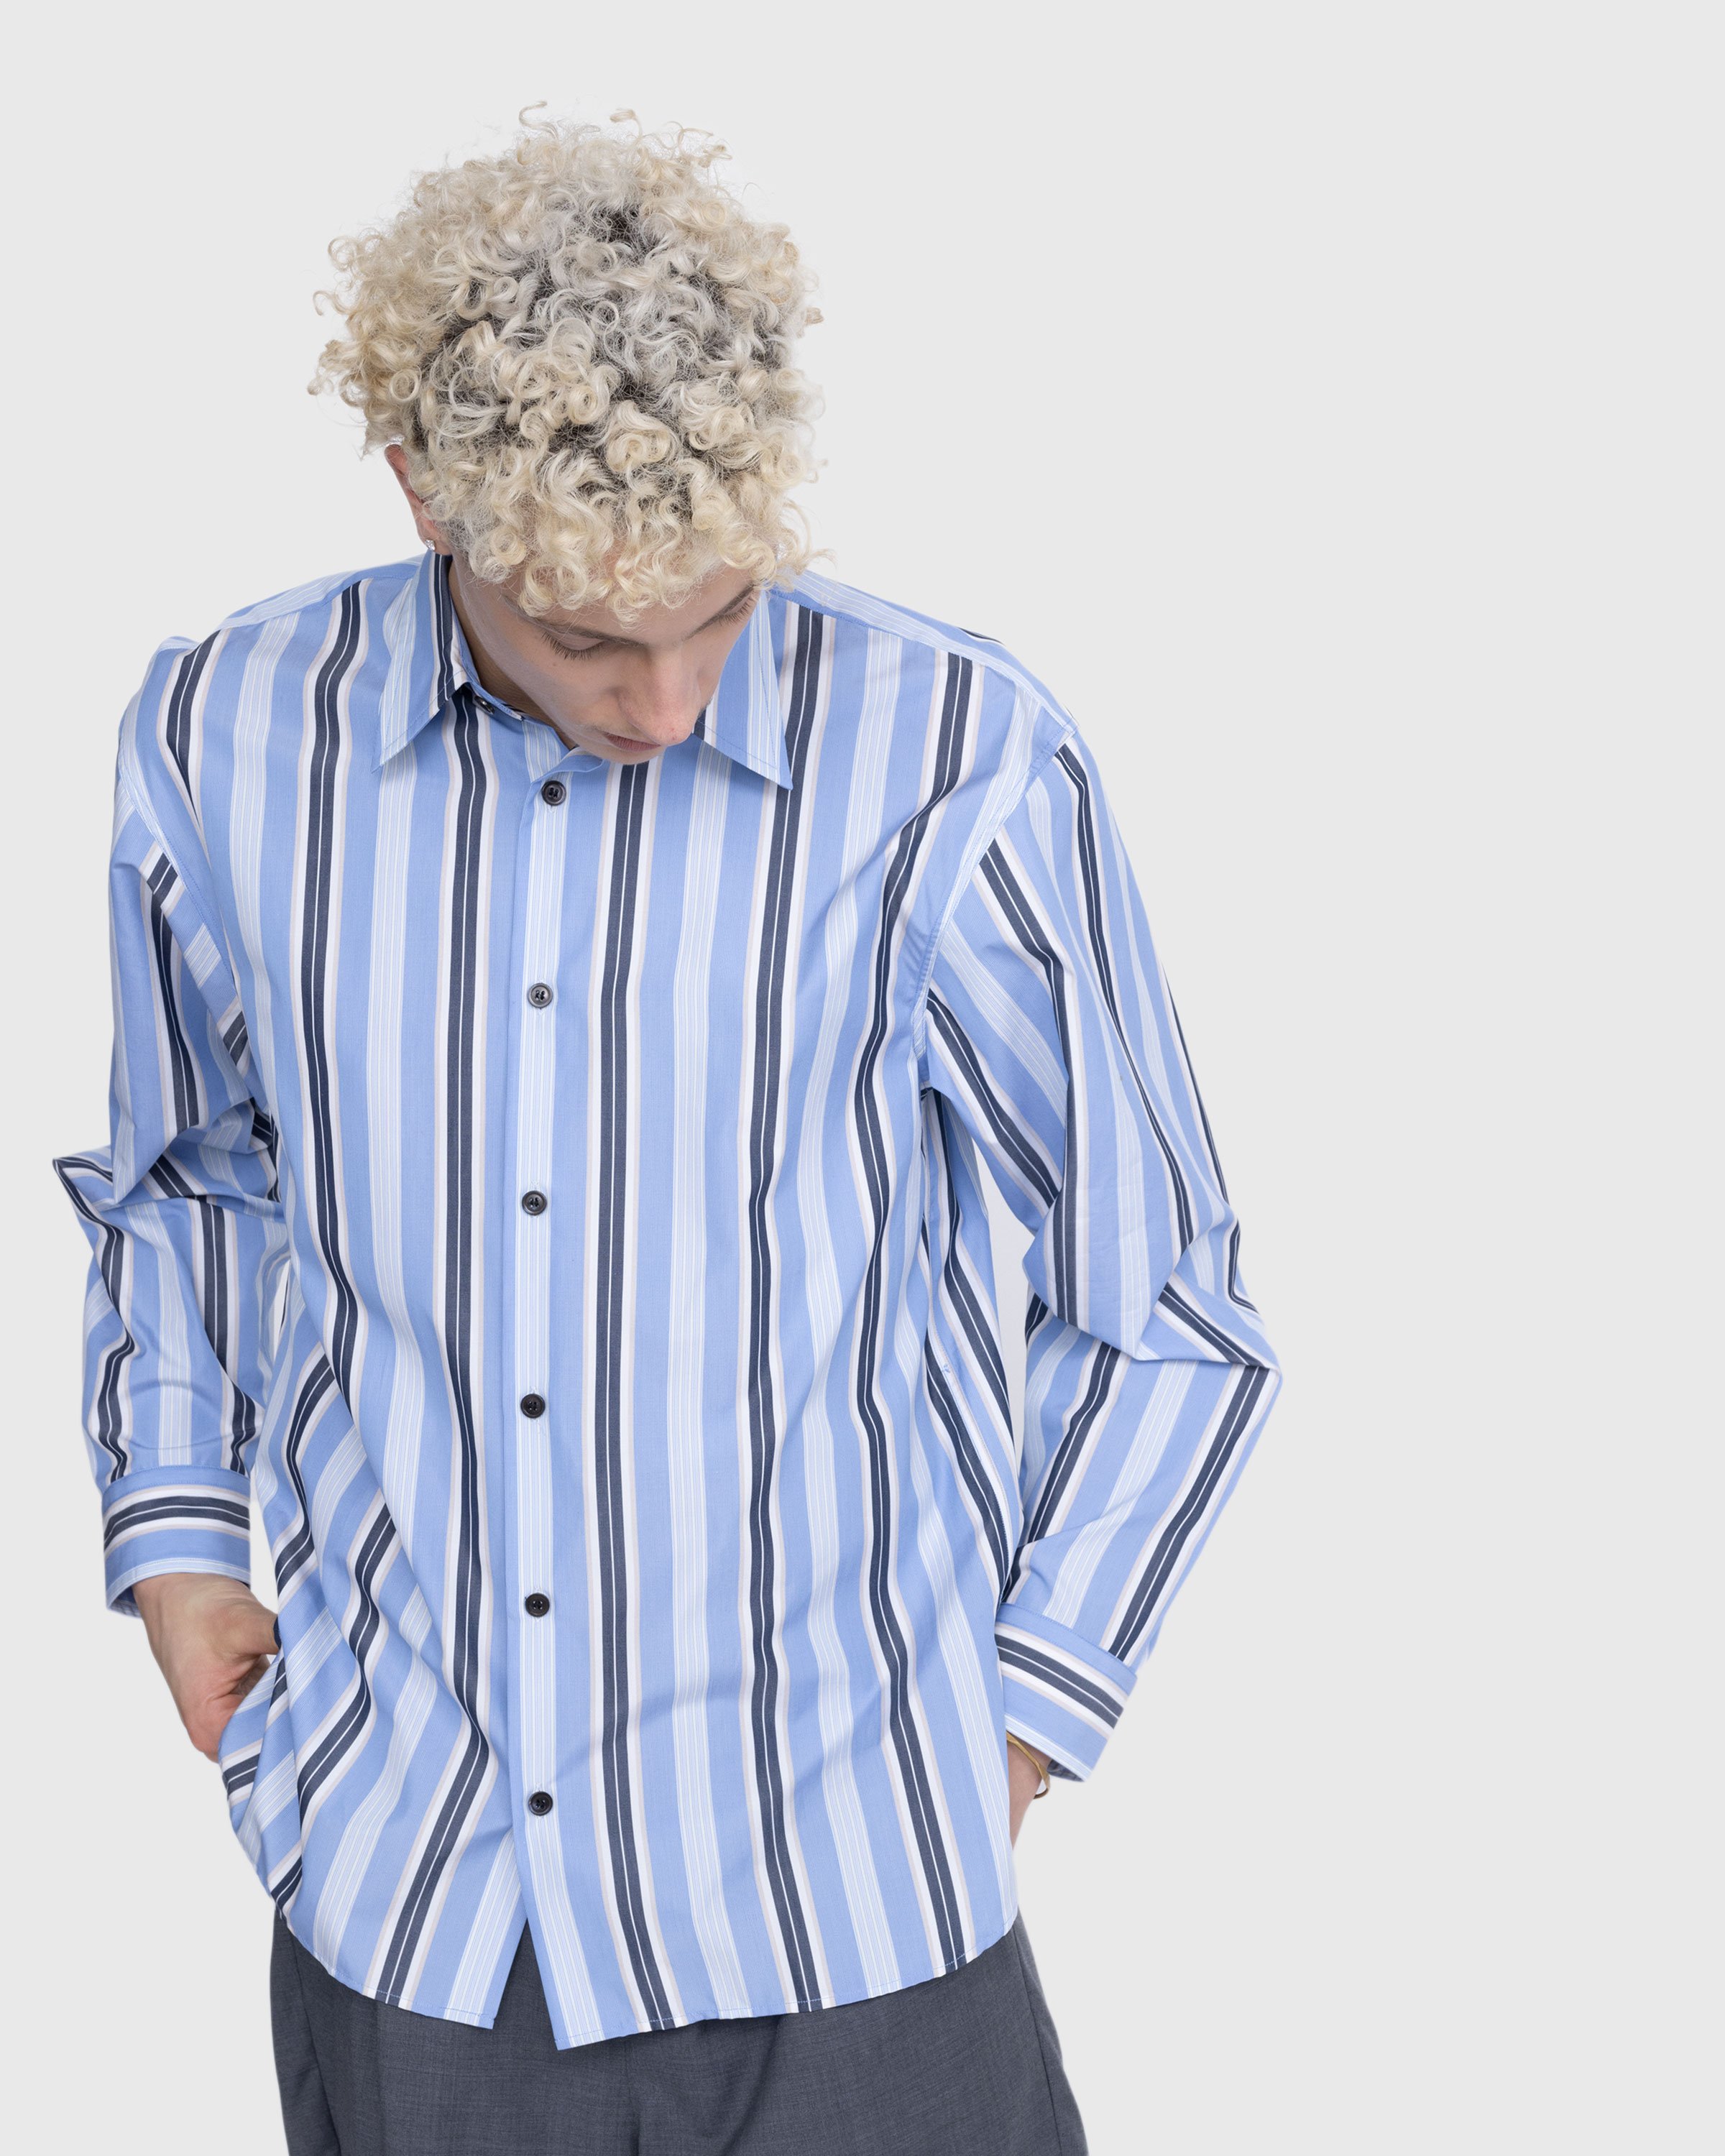 Dries van Noten - Croom Shirt Light Blue - Clothing - Blue - Image 6